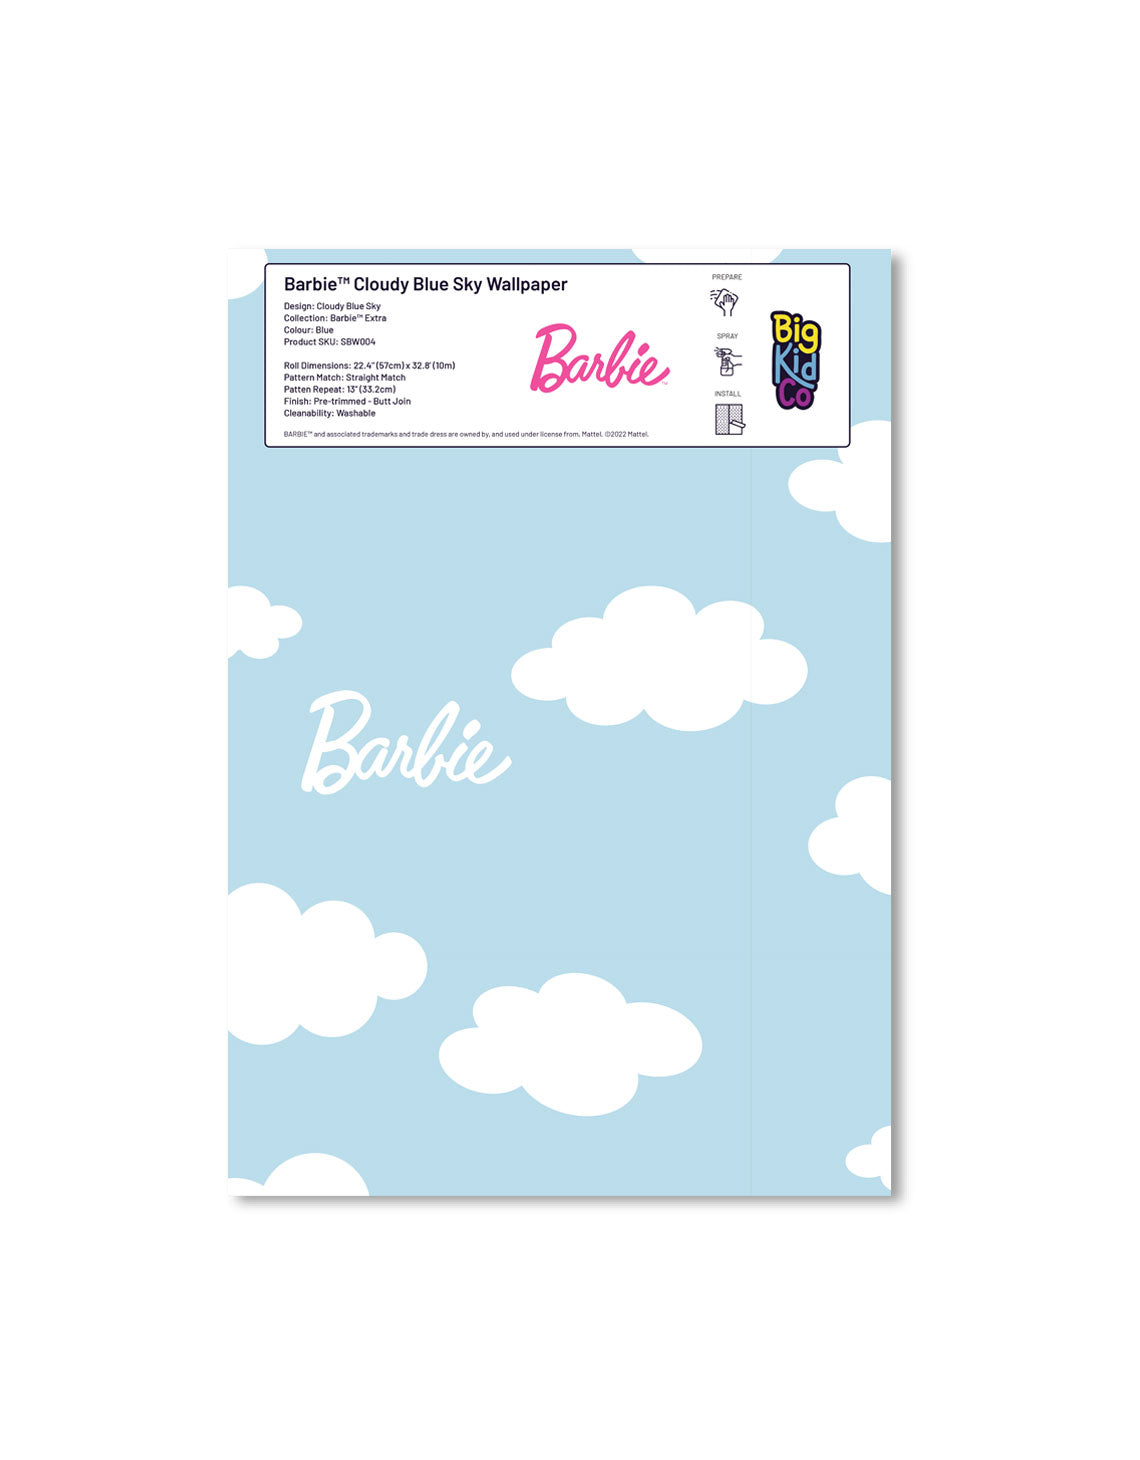 Barbie Cloudy Blue Sky Wallpaper